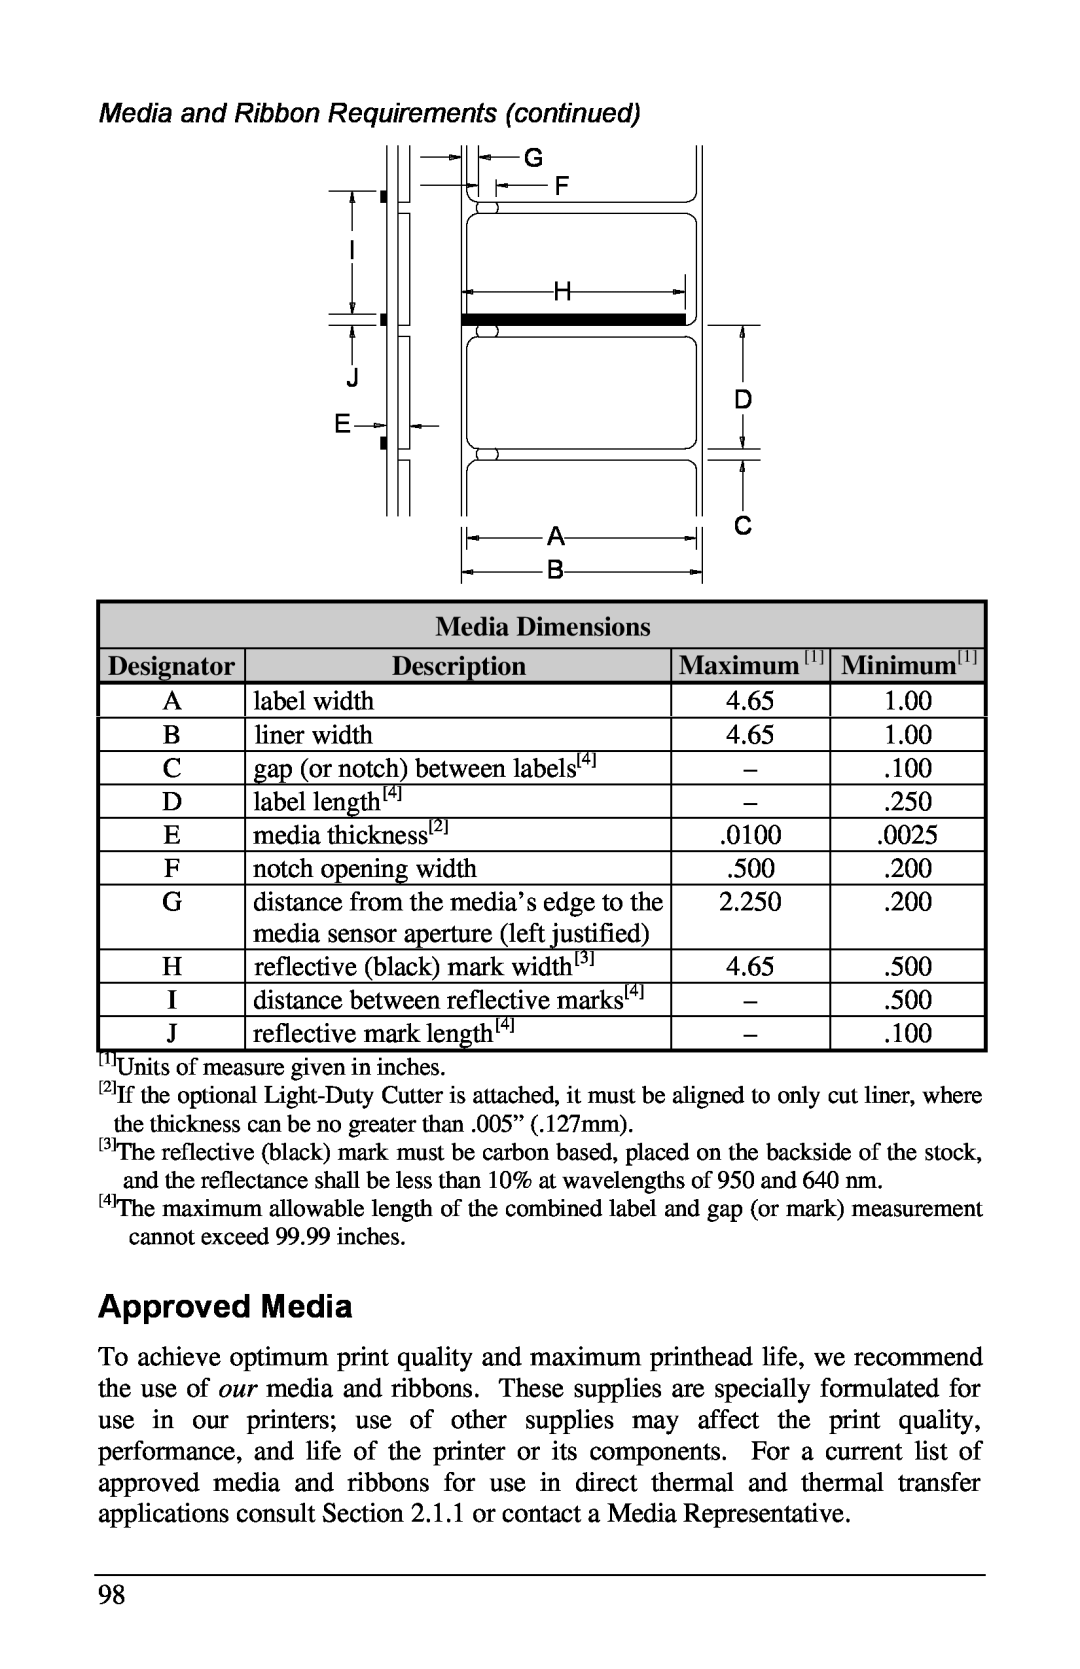 Brady 3481 Approved Media, Media and Ribbon Requirements continued, Media Dimensions, Designator, Description, Maximum 